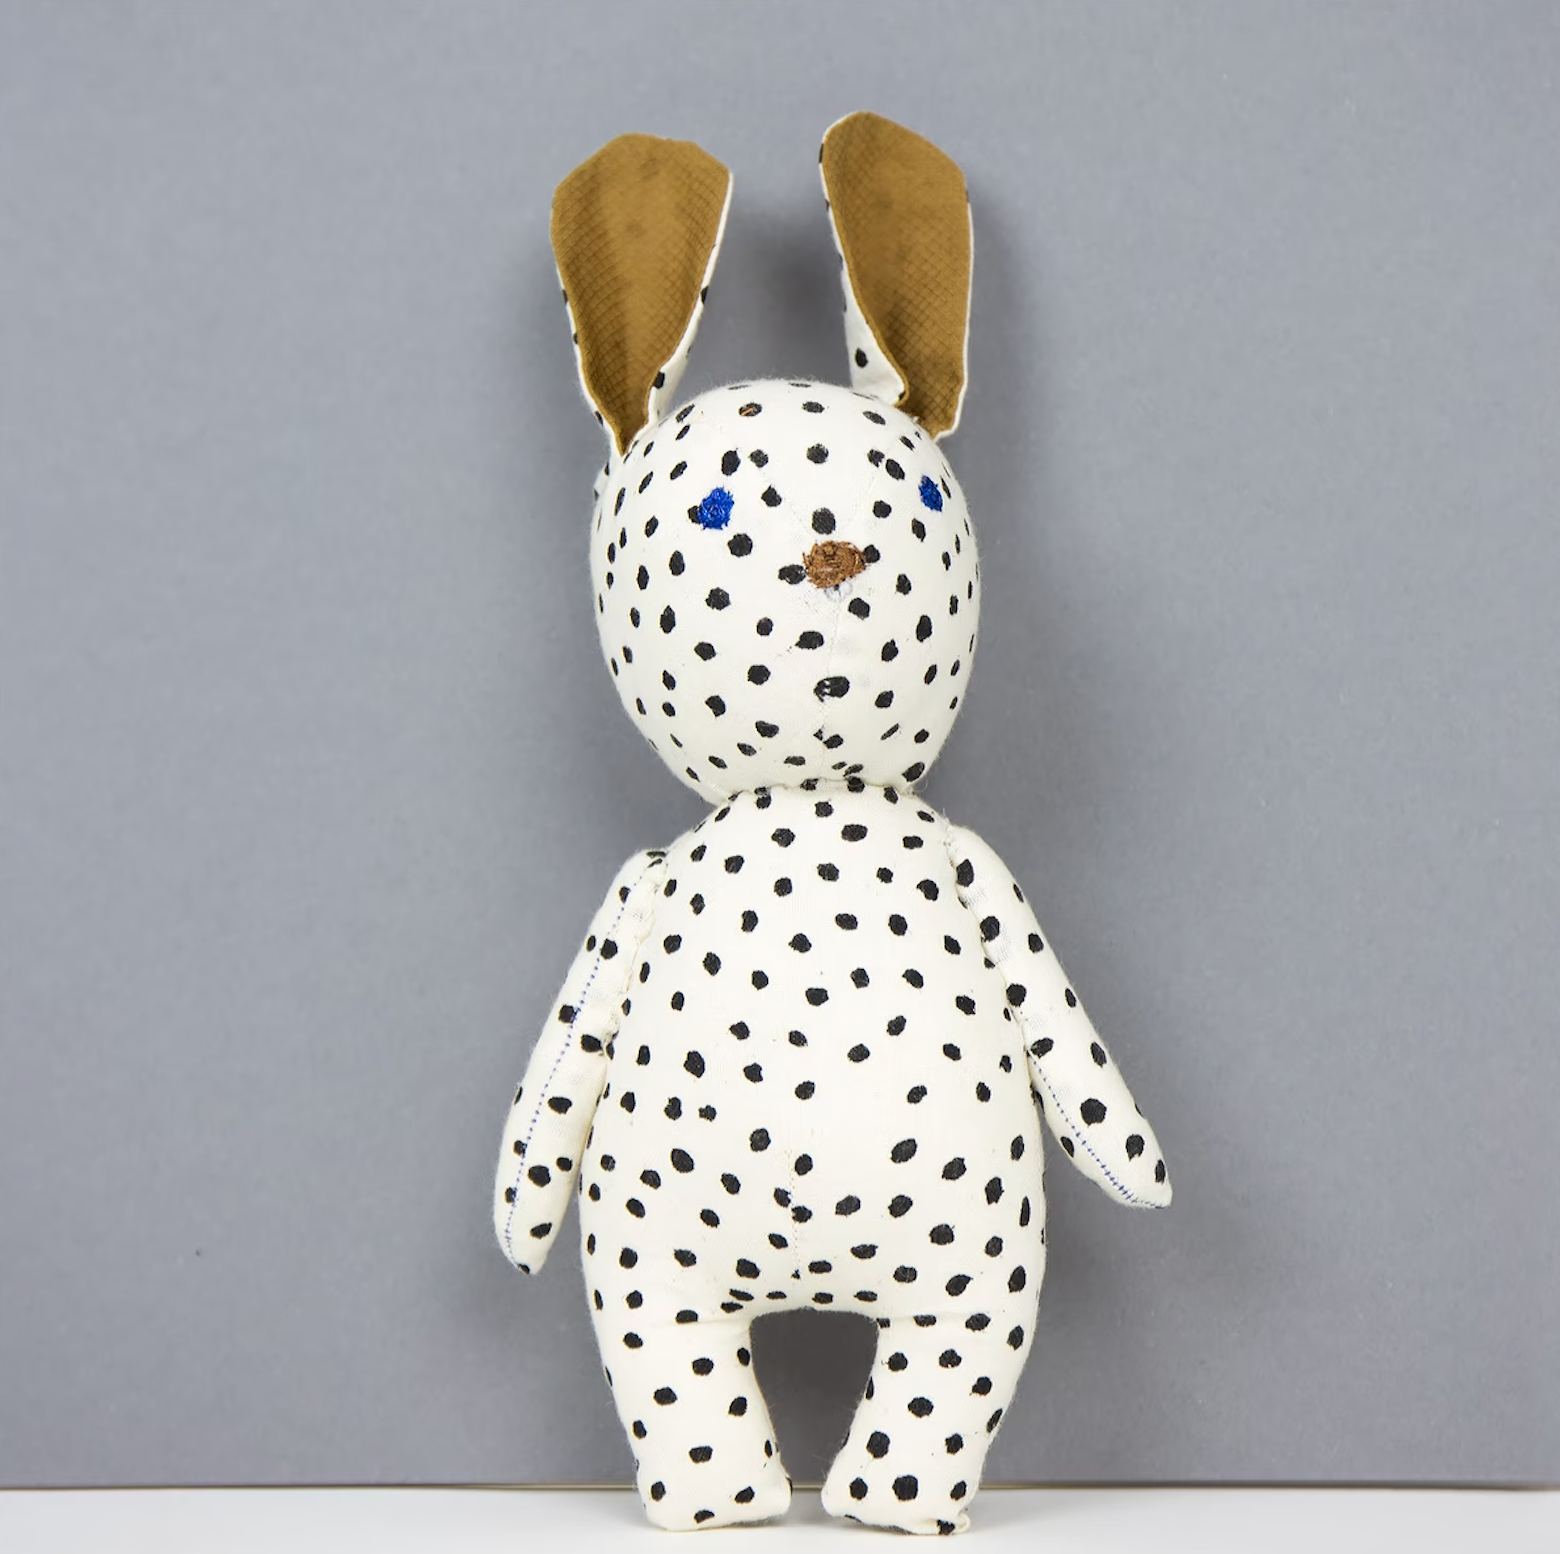 Rabbit Soft toy, white w. black spots, handmade 18cm